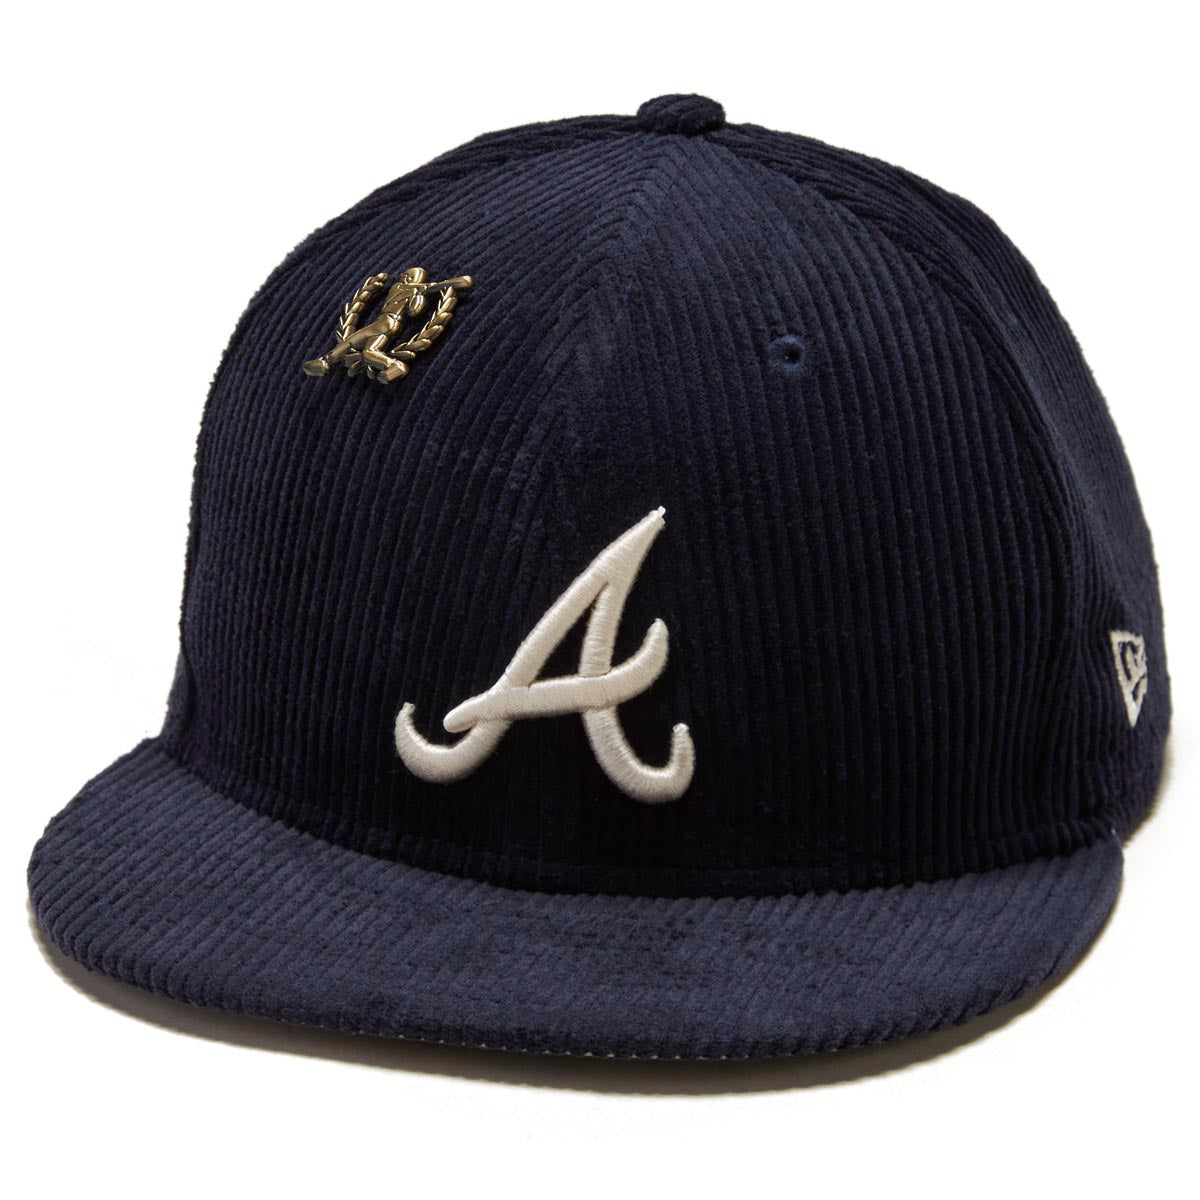 New Era 5950 Letterman Pin Hat - Atlanta Braves image 1